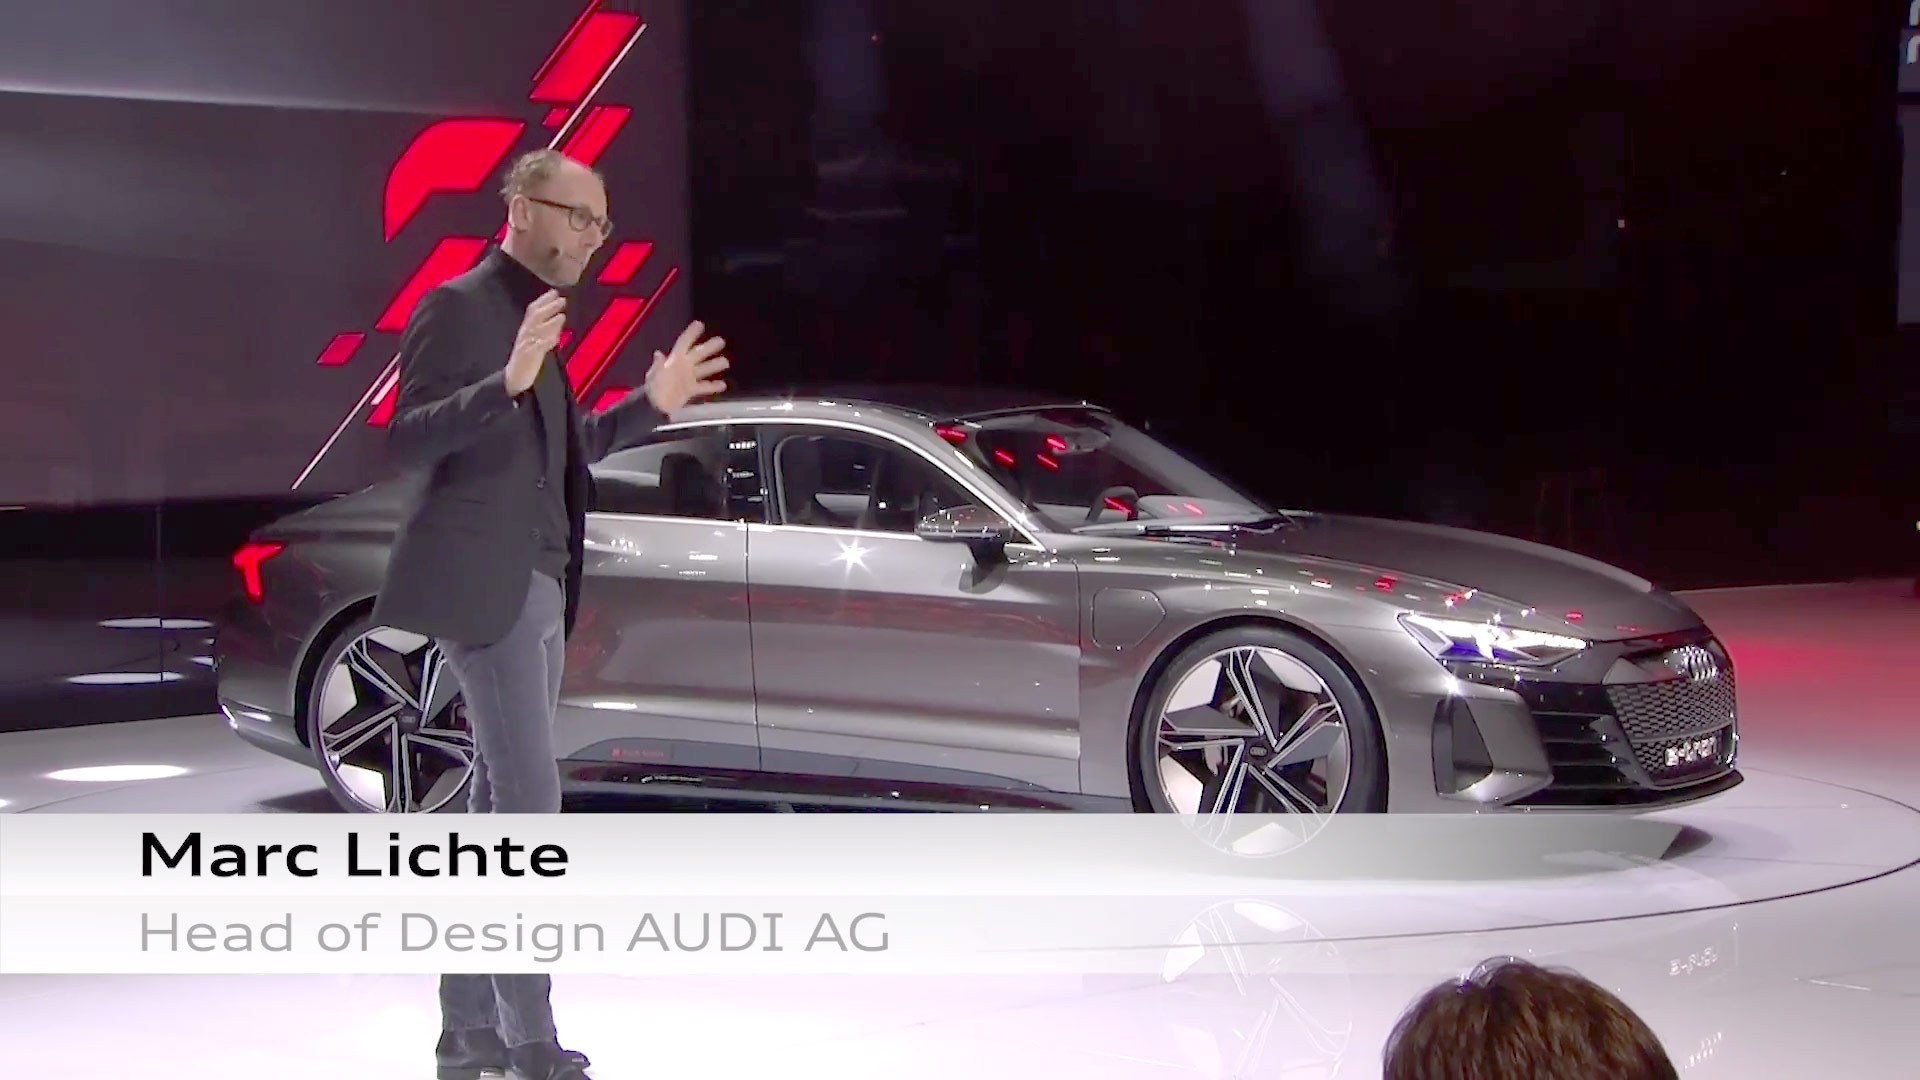 Head of Design Audi AG presents the e-tron GT concept at the 2019 Geneva Motor Show